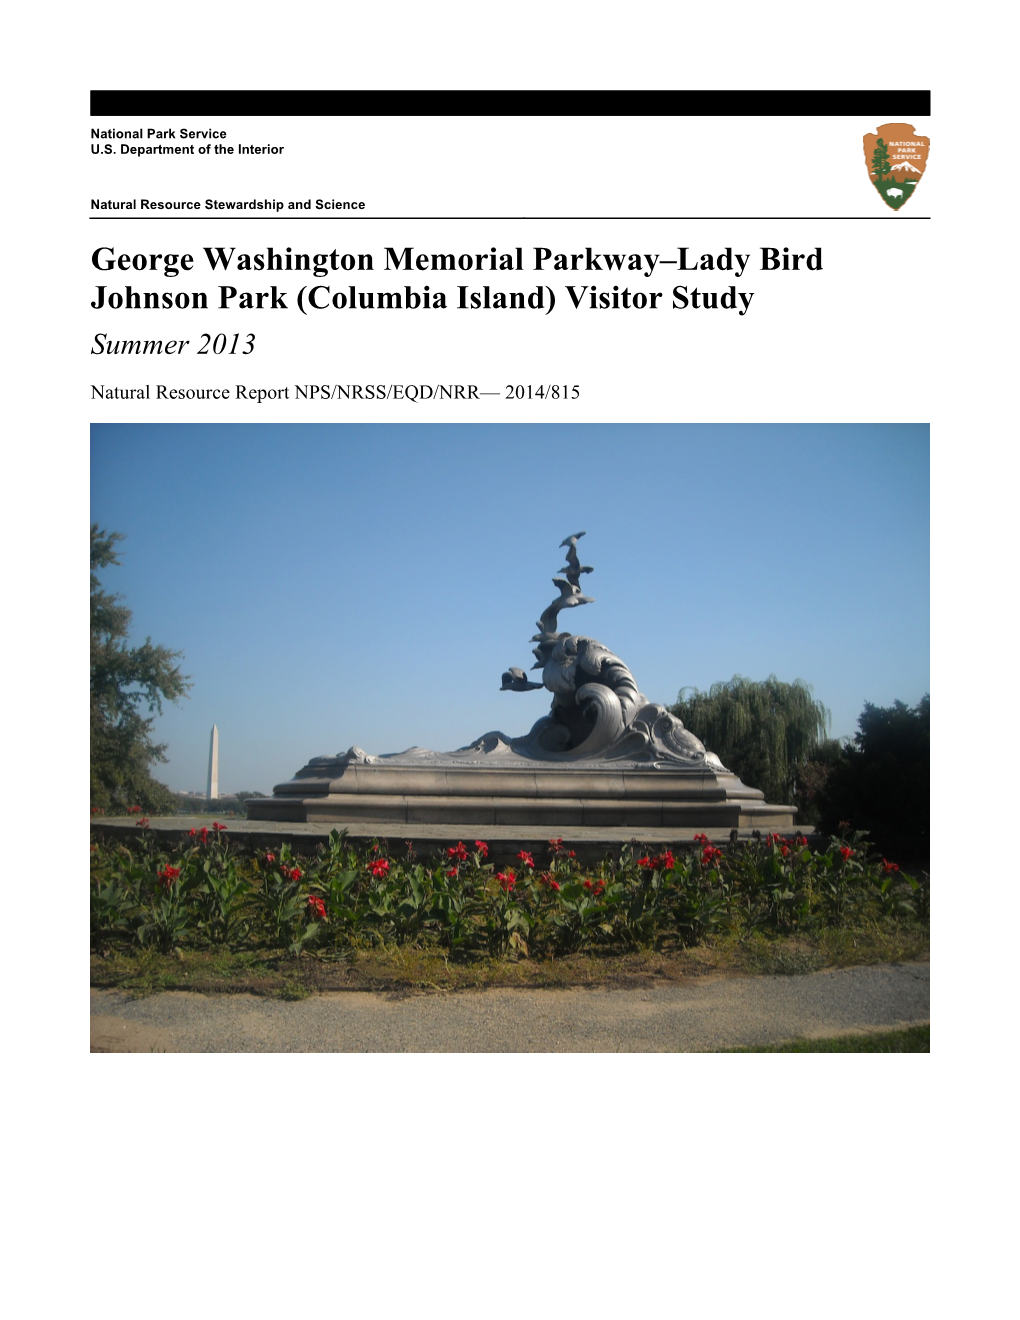 George Washington Memorial Parkway–Lady Bird Johnson Park (Columbia Island) Visitor Study Summer 2013